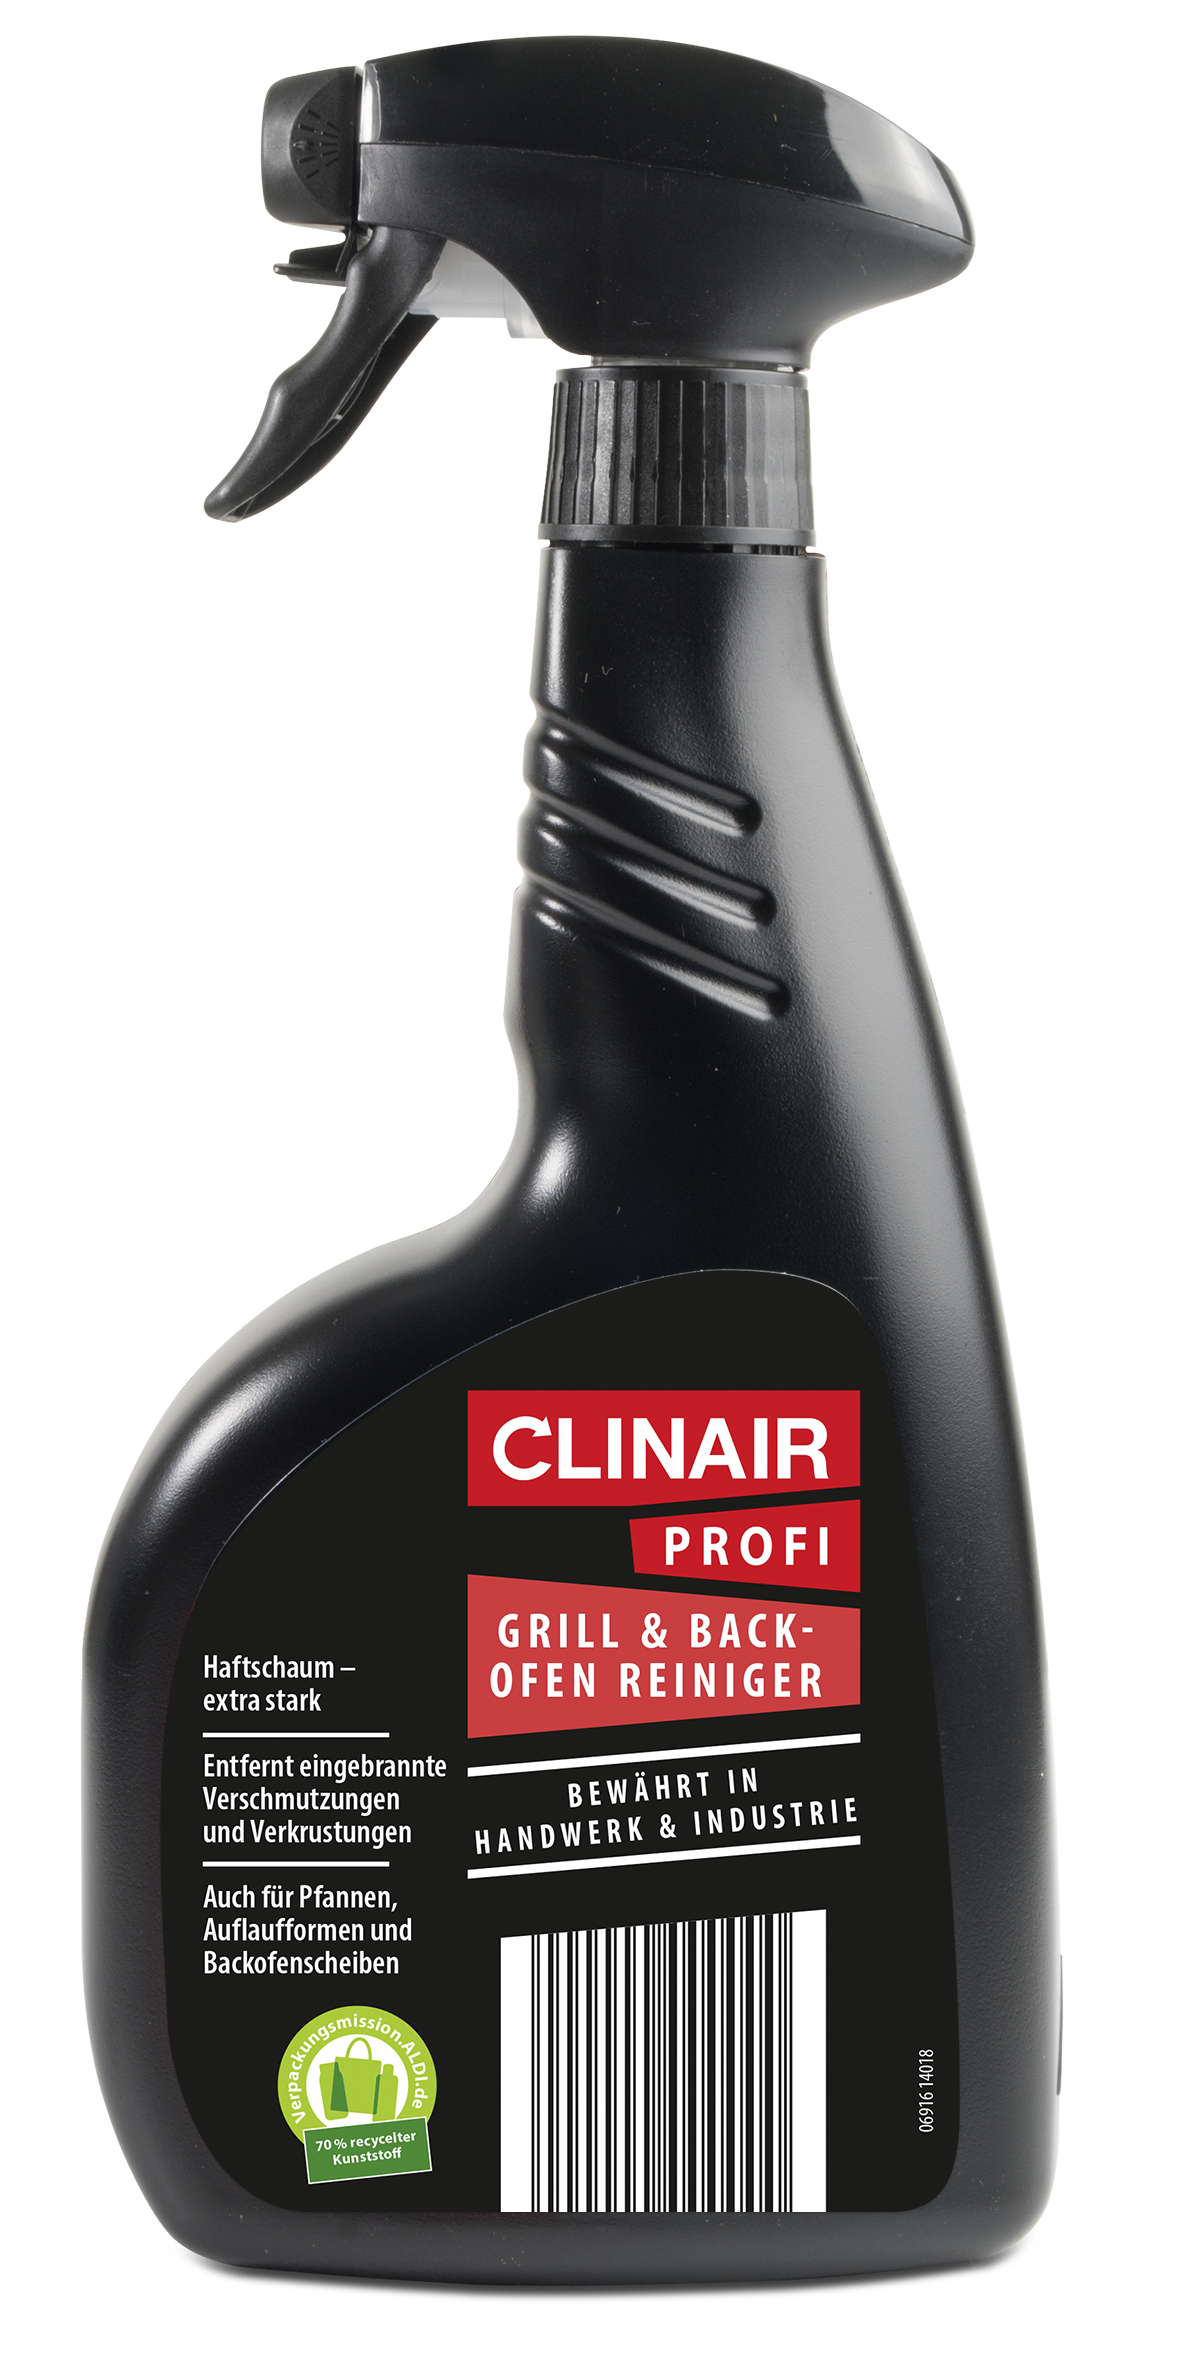 Clinair Profi Grill & Backofen Reiniger